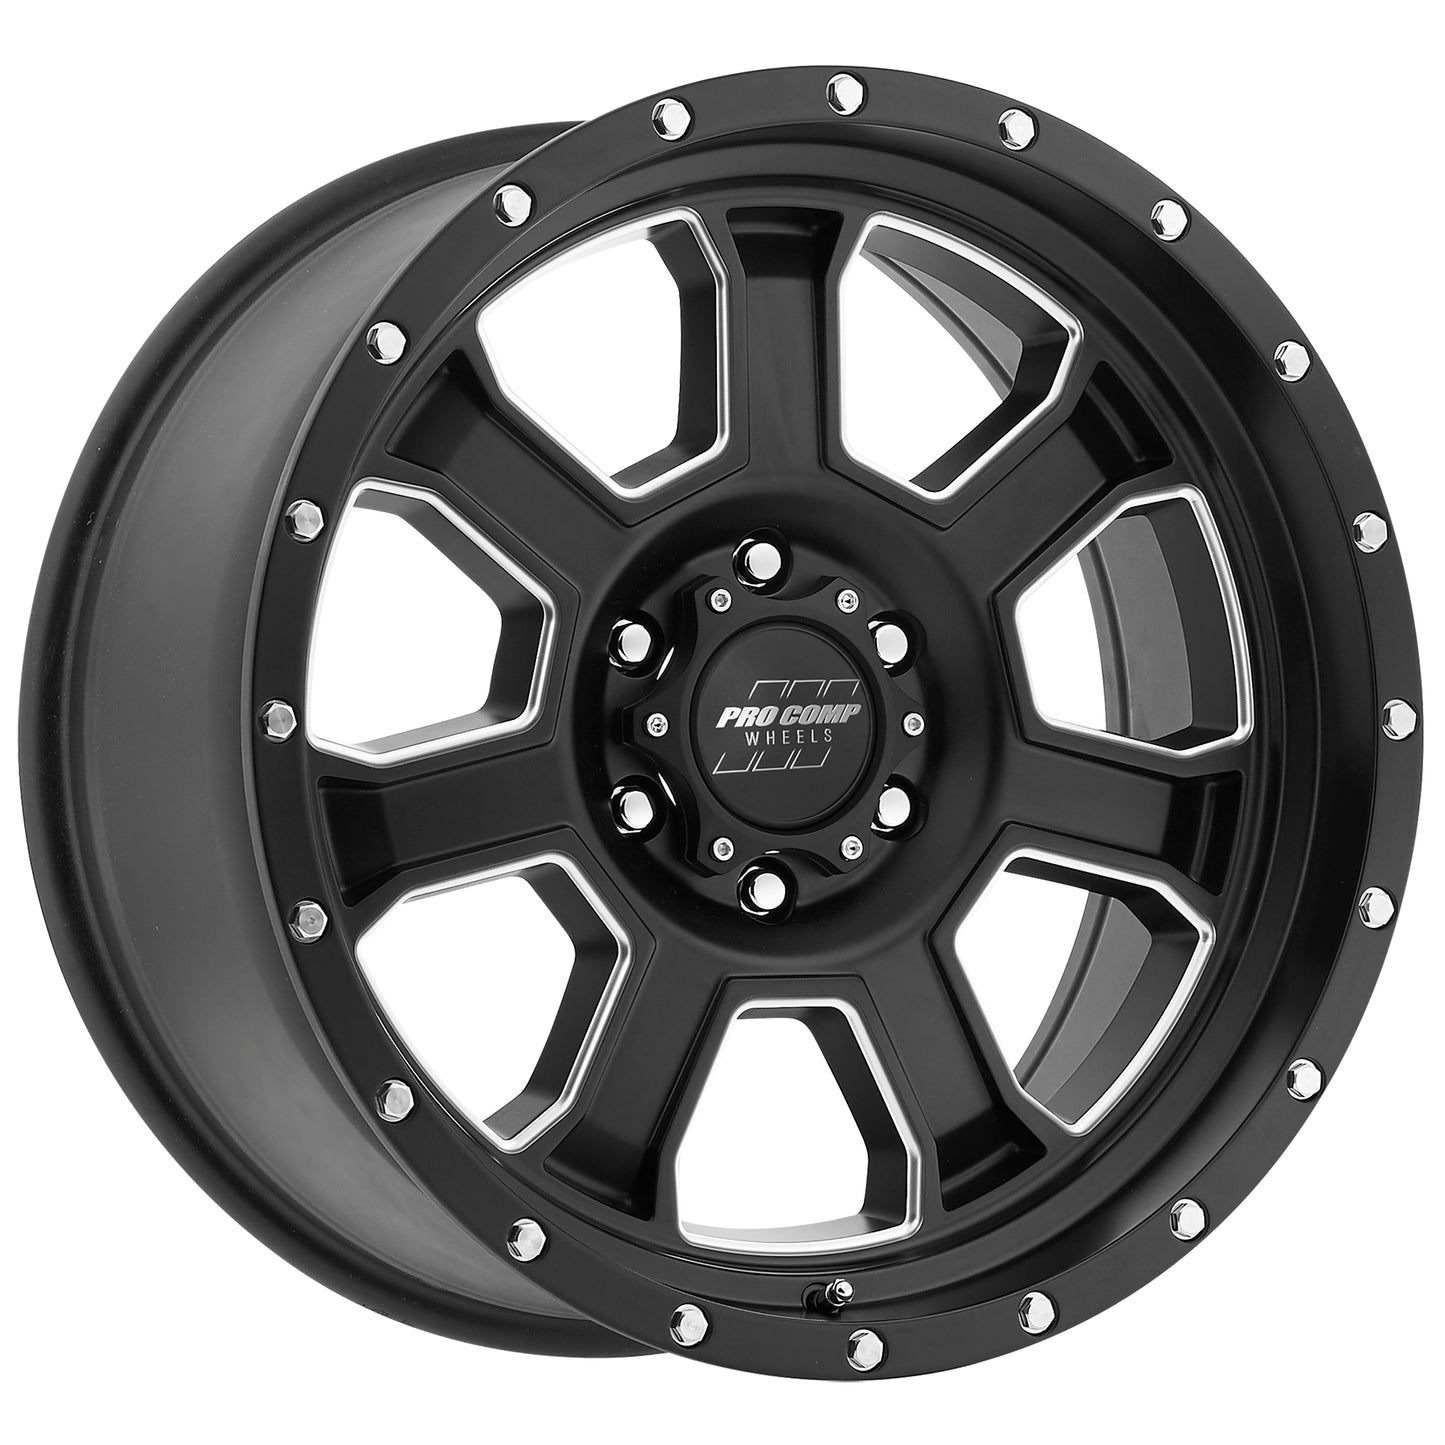 Pro Comp Wheels Sledge Satin Black Milled 20X9 6x135 5BS Offset 0mm Cap P/N 503434200 5143-2936